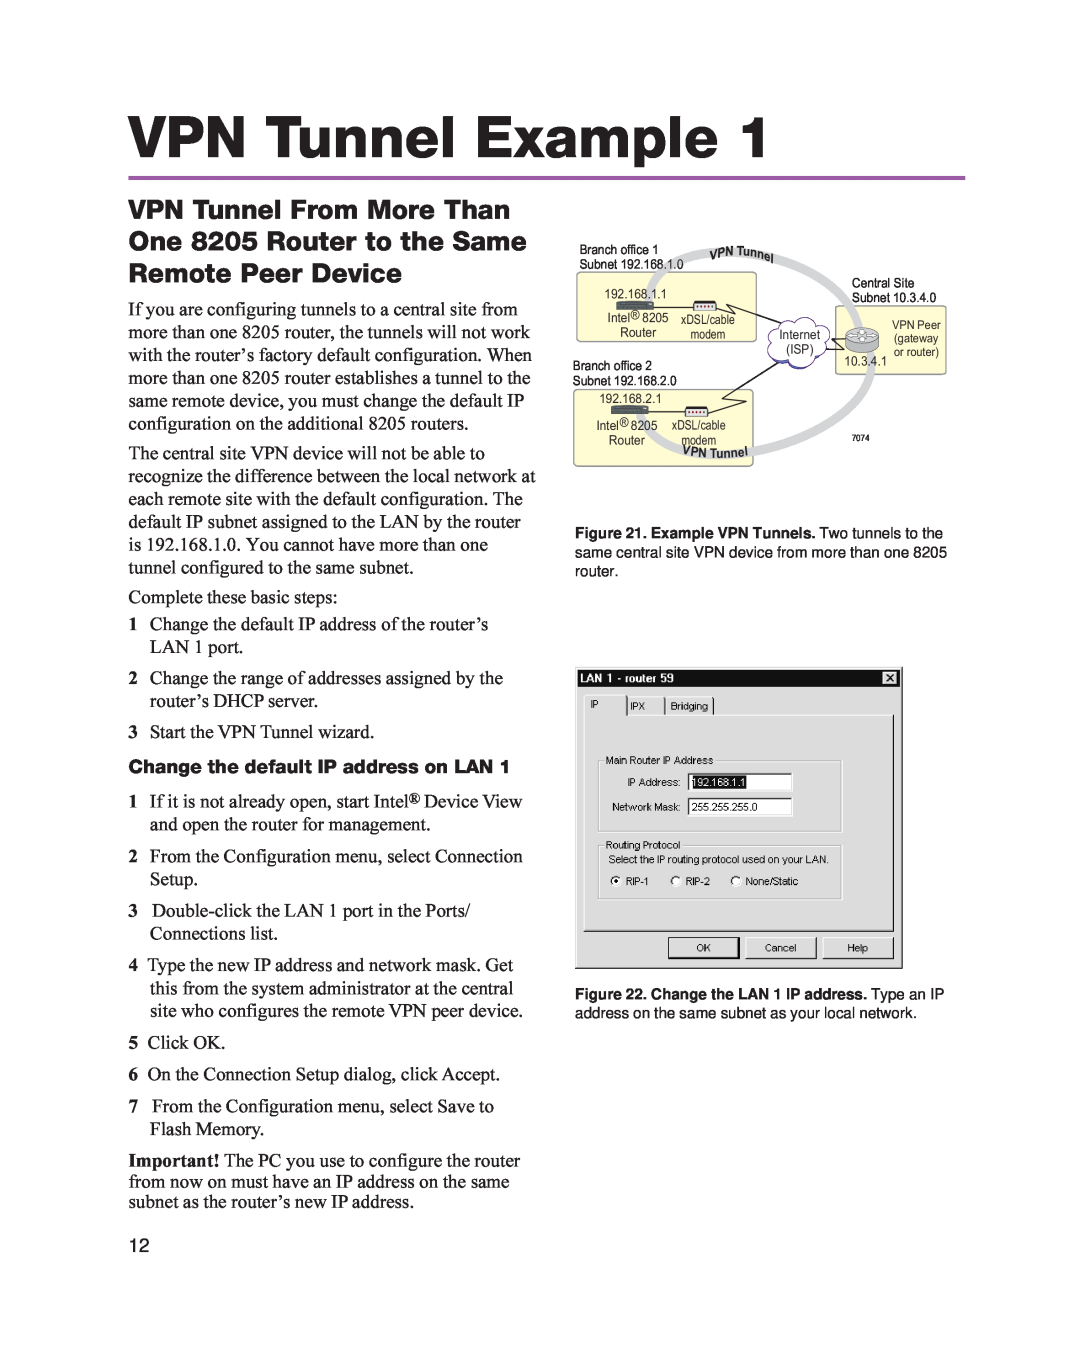 Intel 8205 quick start VPN Tunnel Example, Change the default IP address on LAN 